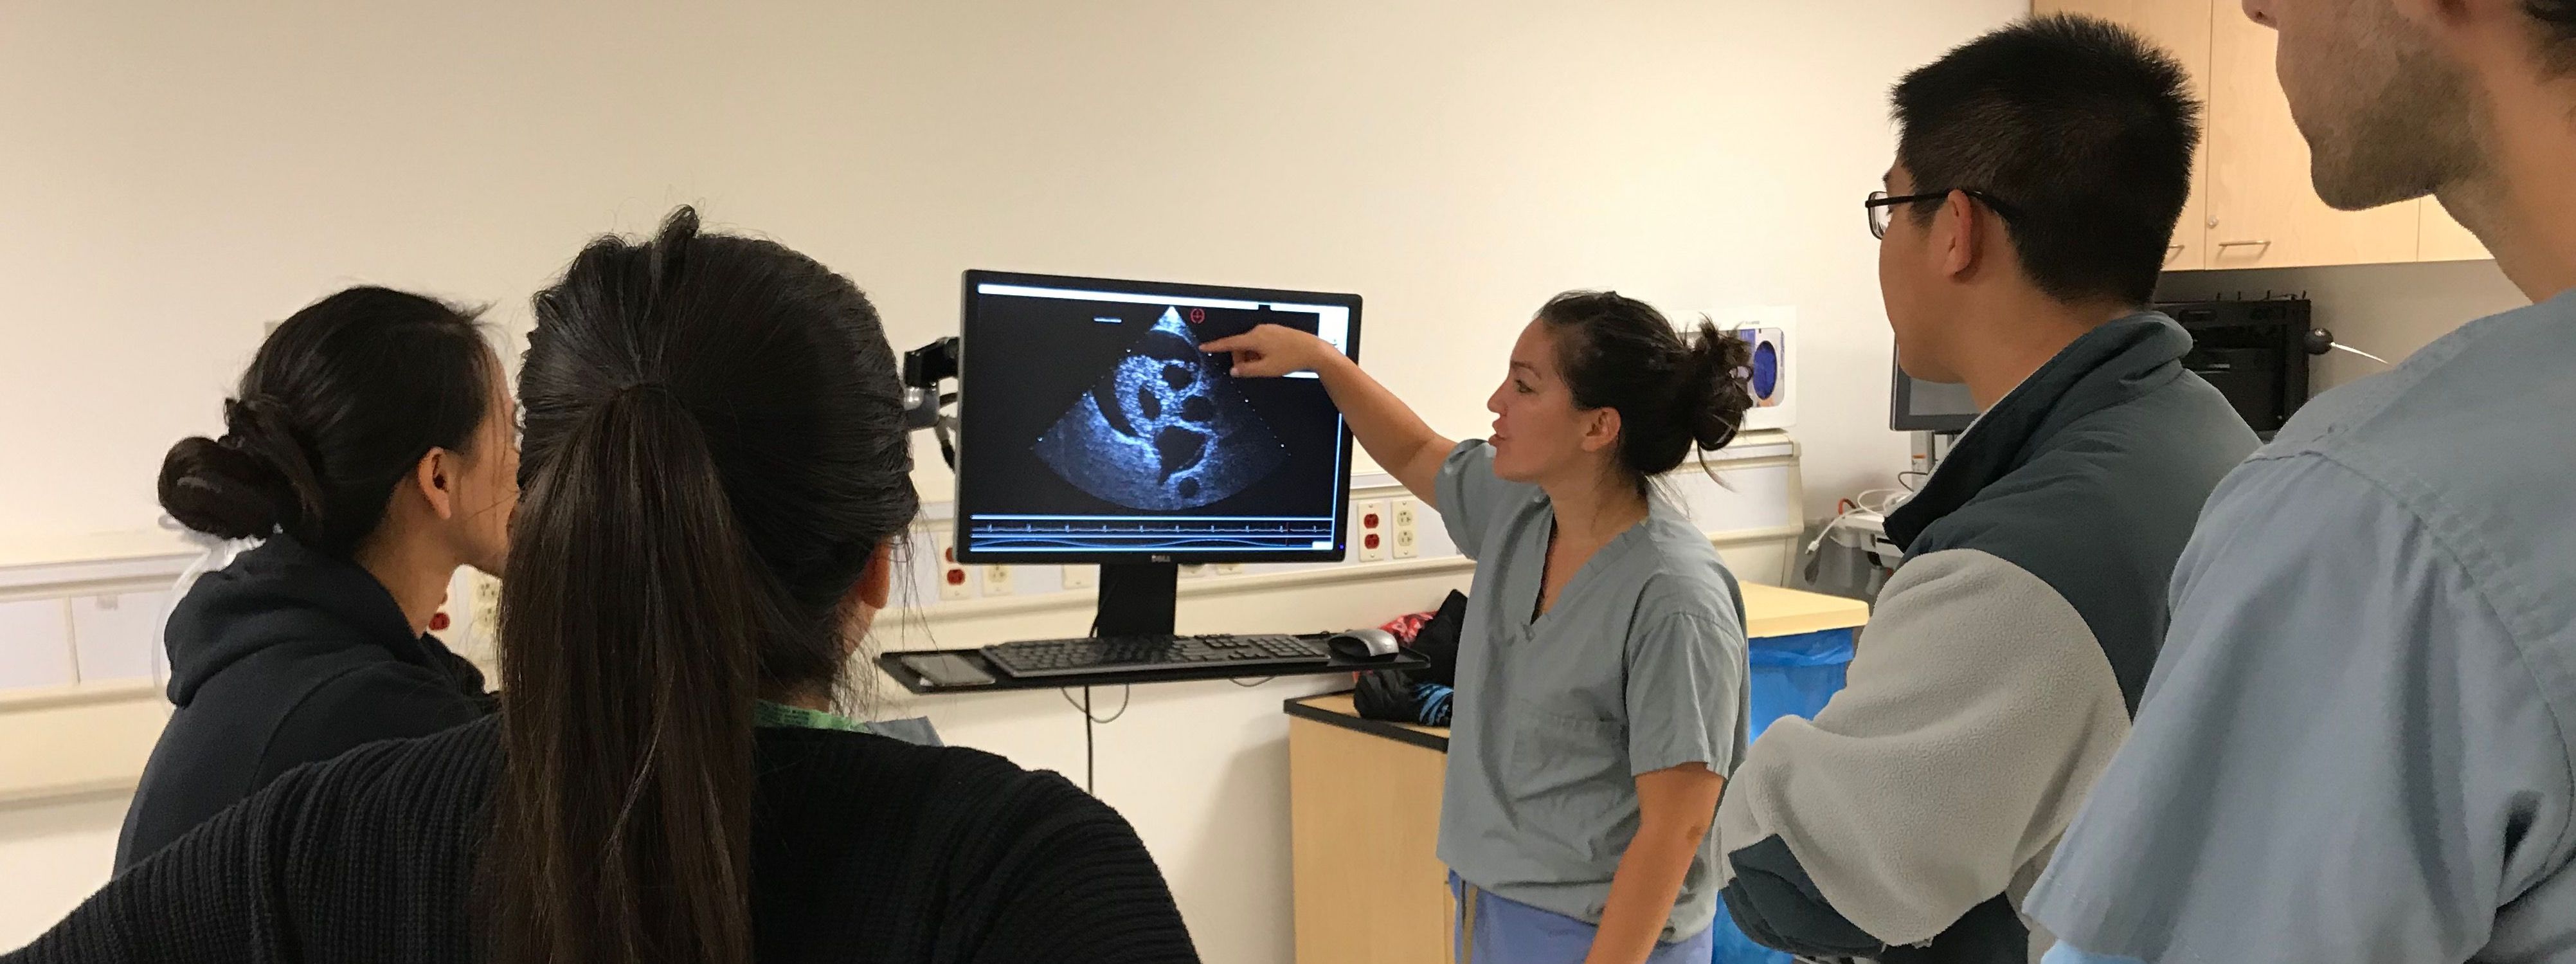 DGSOM students reading an ultrasound image